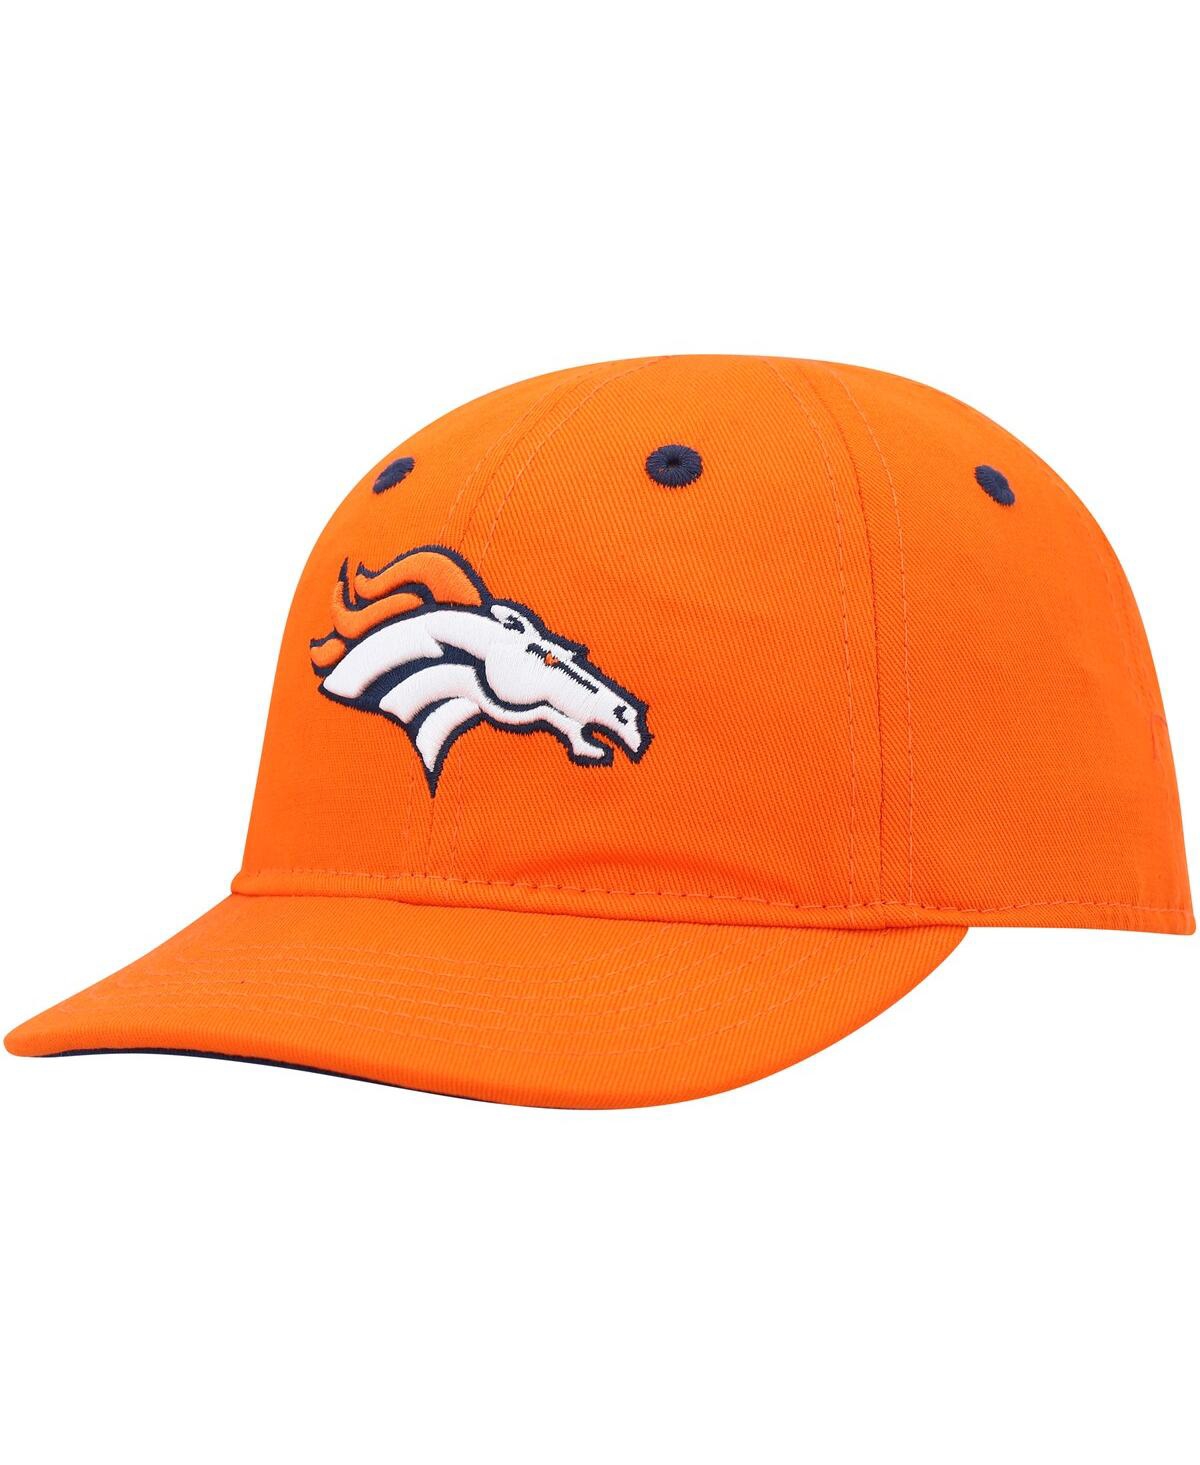 Outerstuff Baby Boys And Girls Orange Denver Broncos Team Slouch Flex Hat